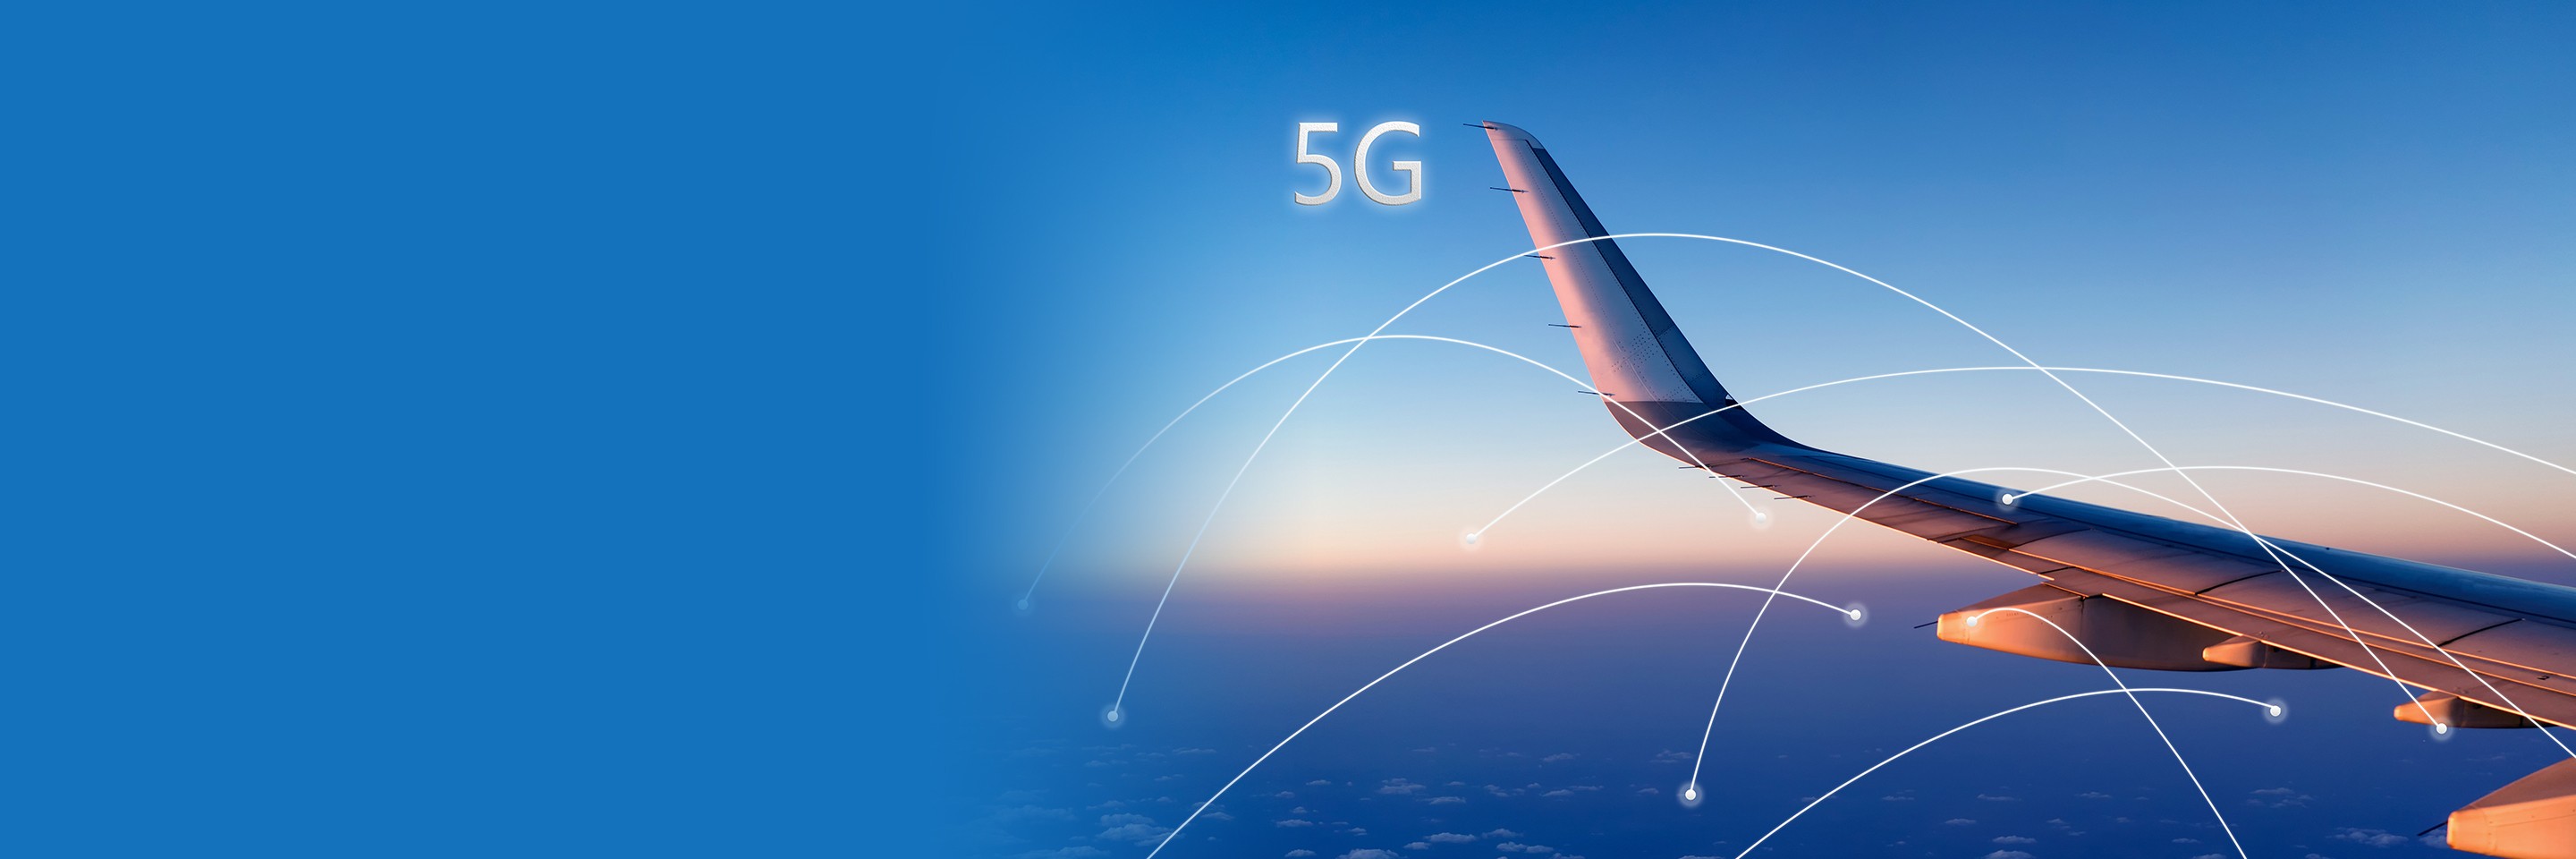 5G new high-speed rail wireless internet wifi concept on plane